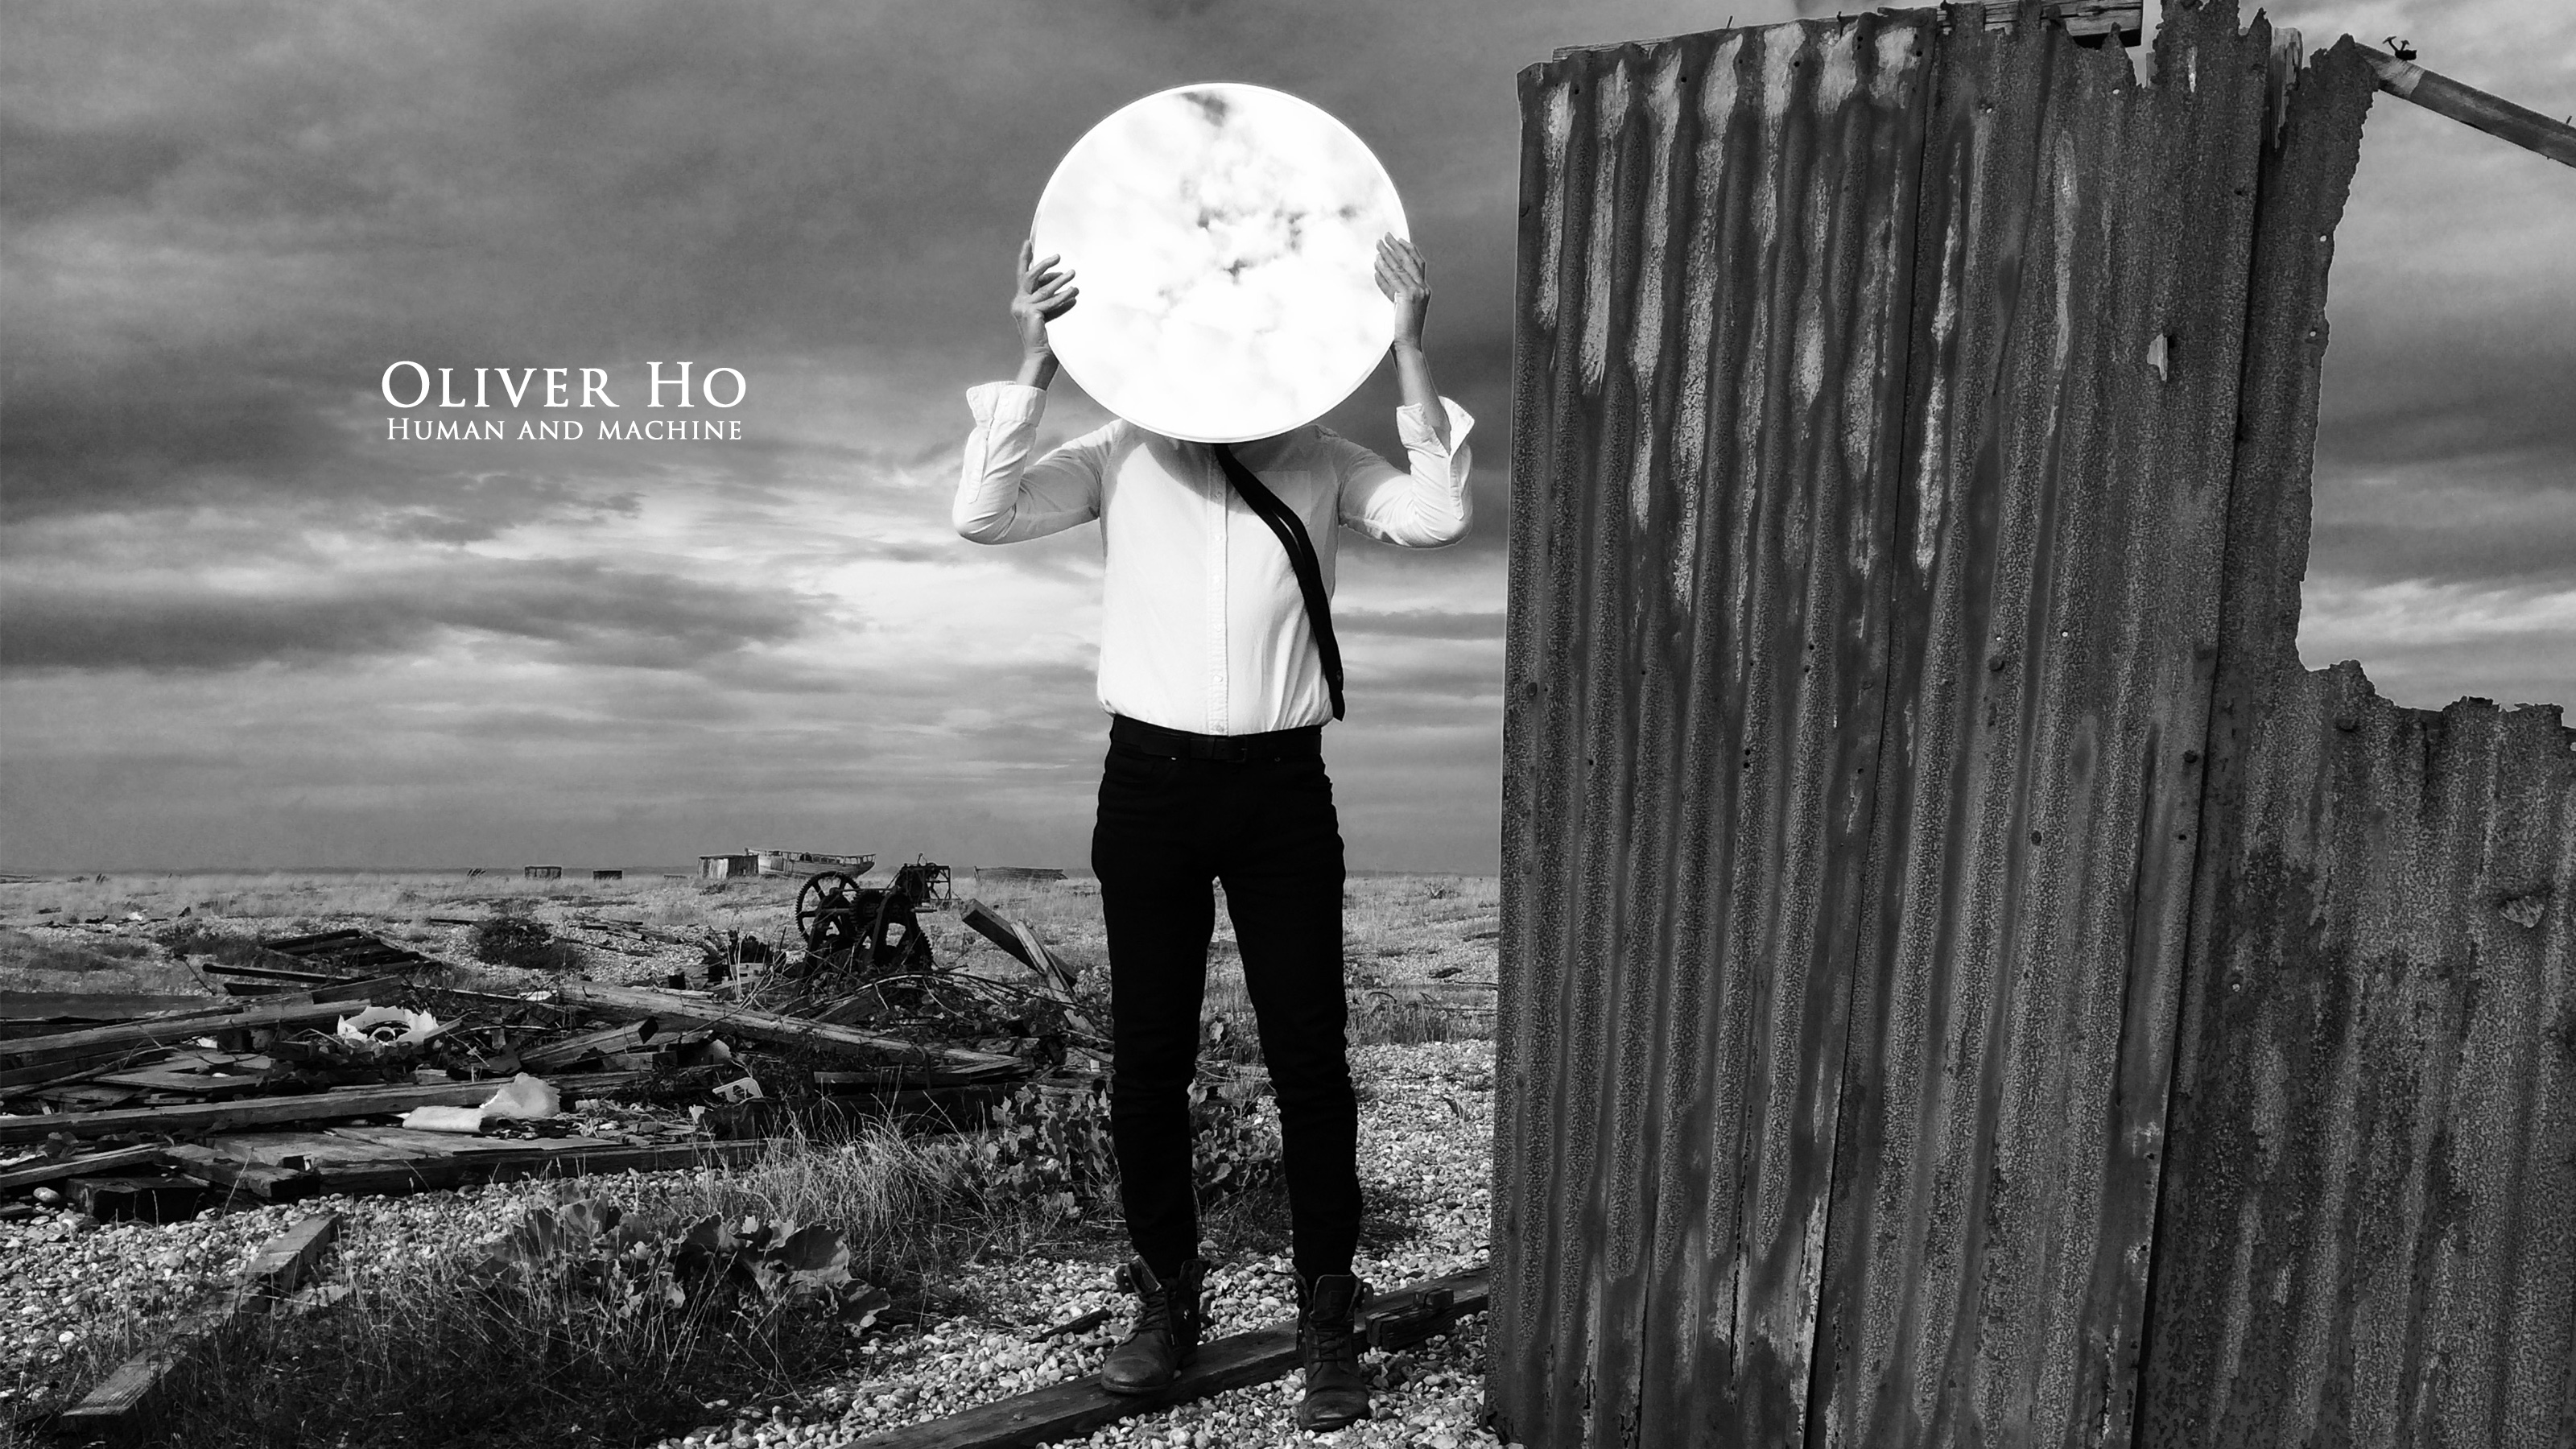 Oliver Ho: Human and machine